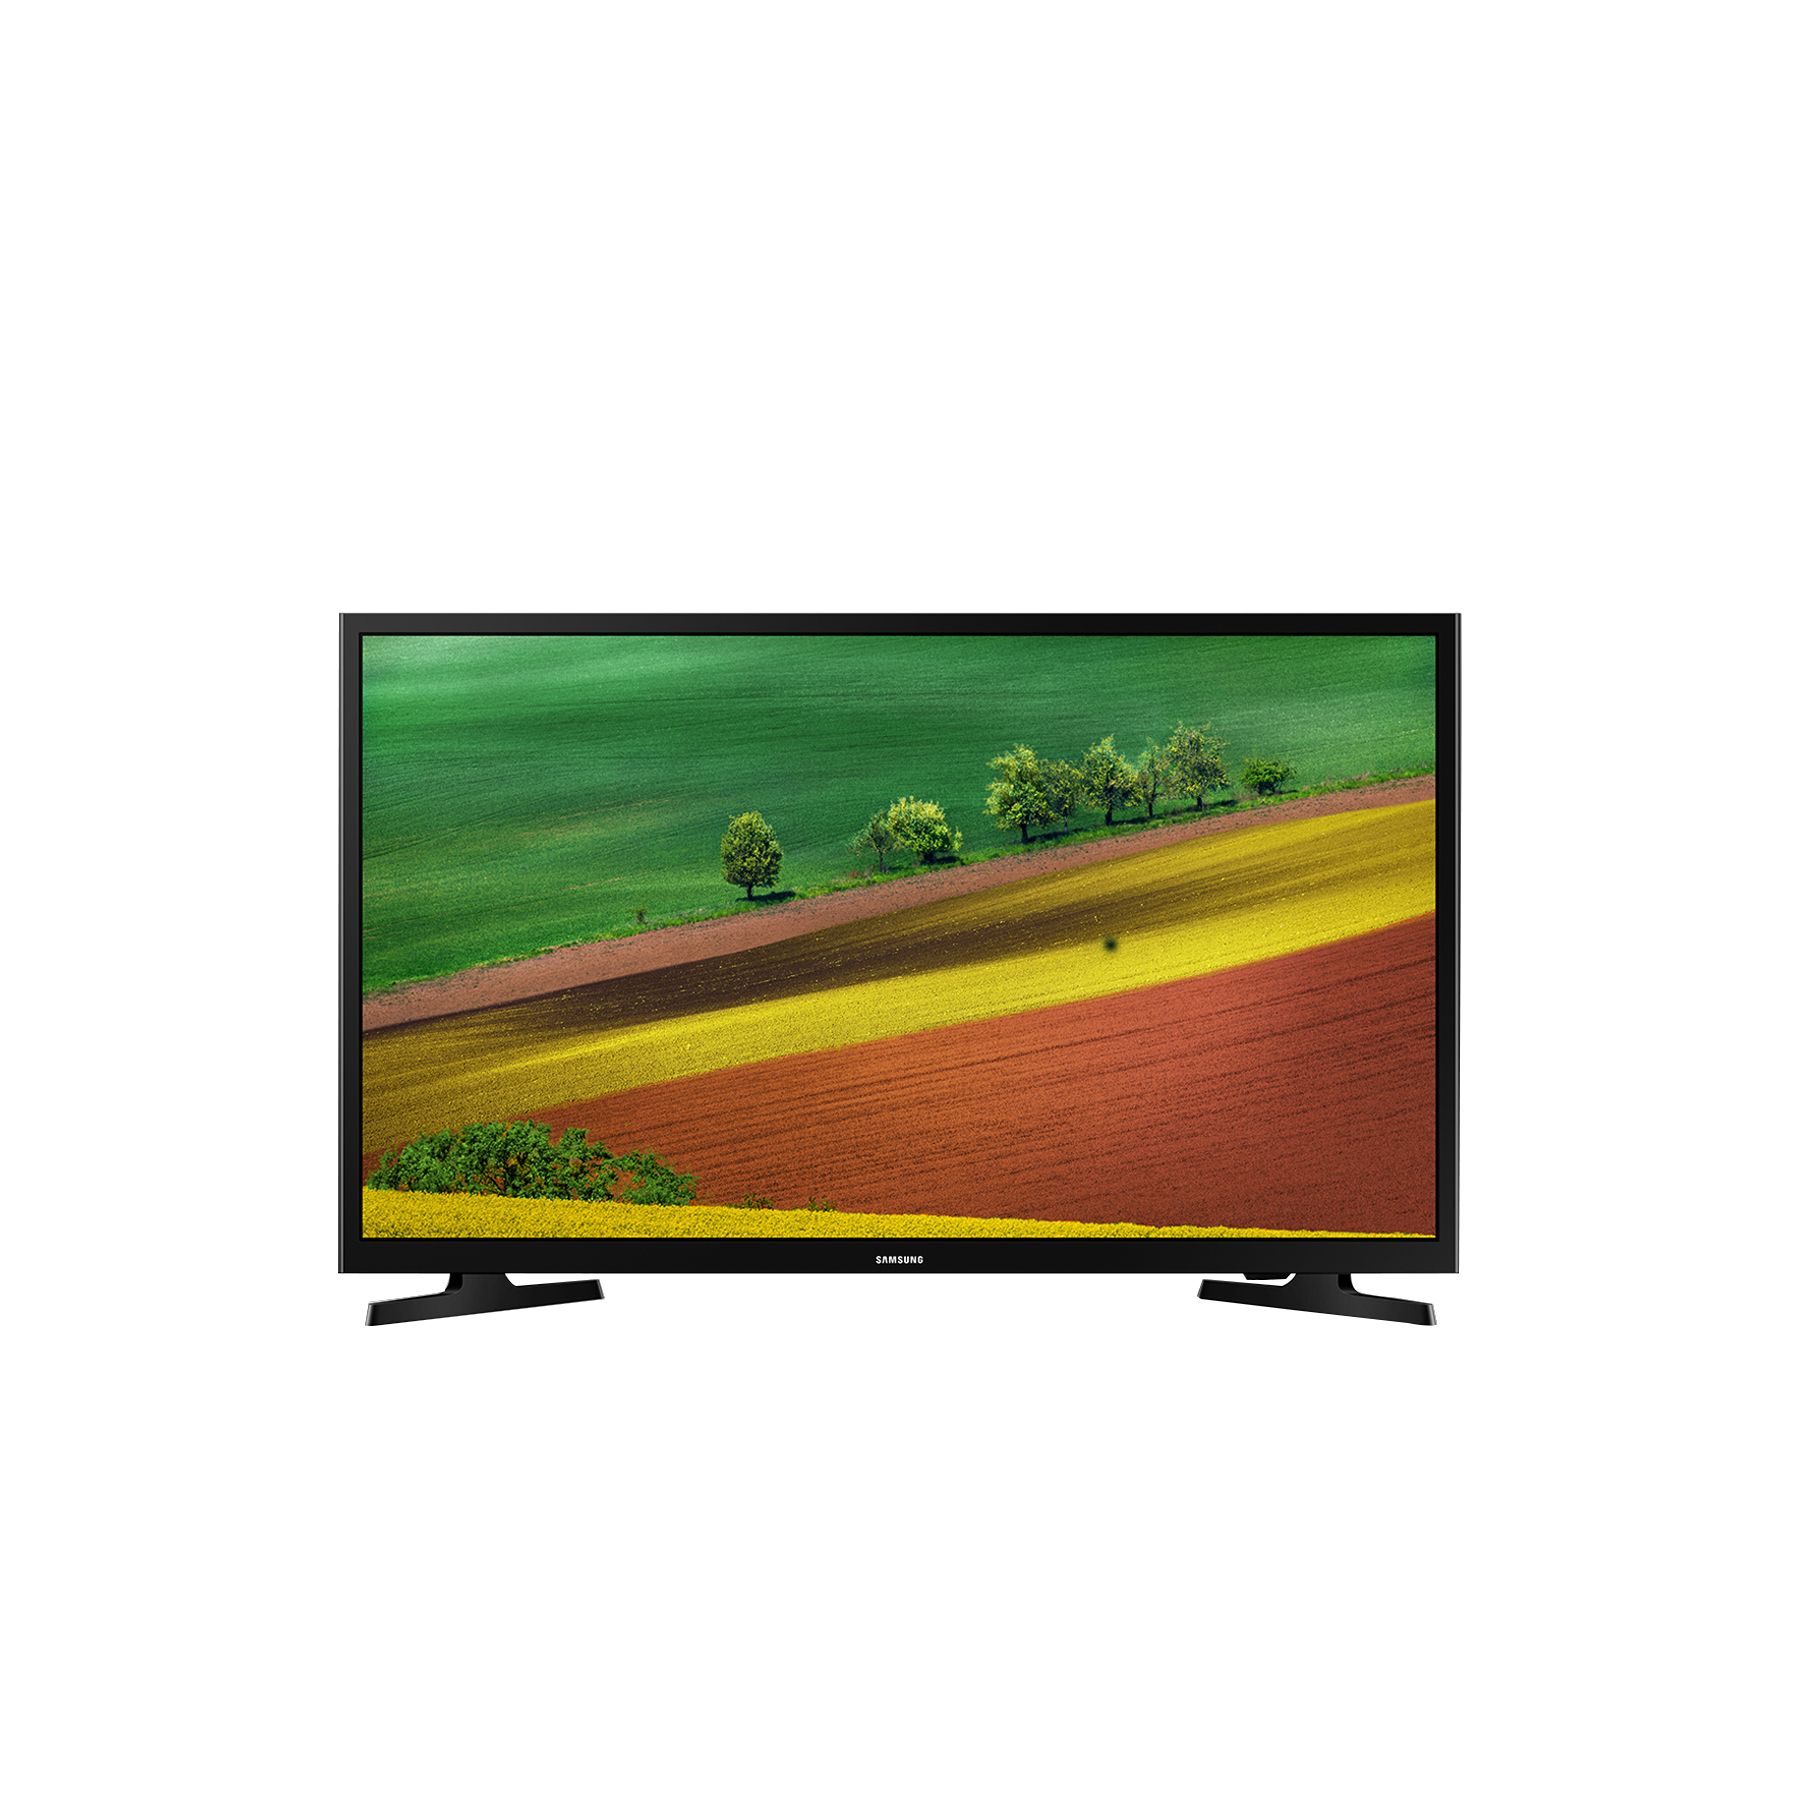 Samsung Television 32 LED HD Smart